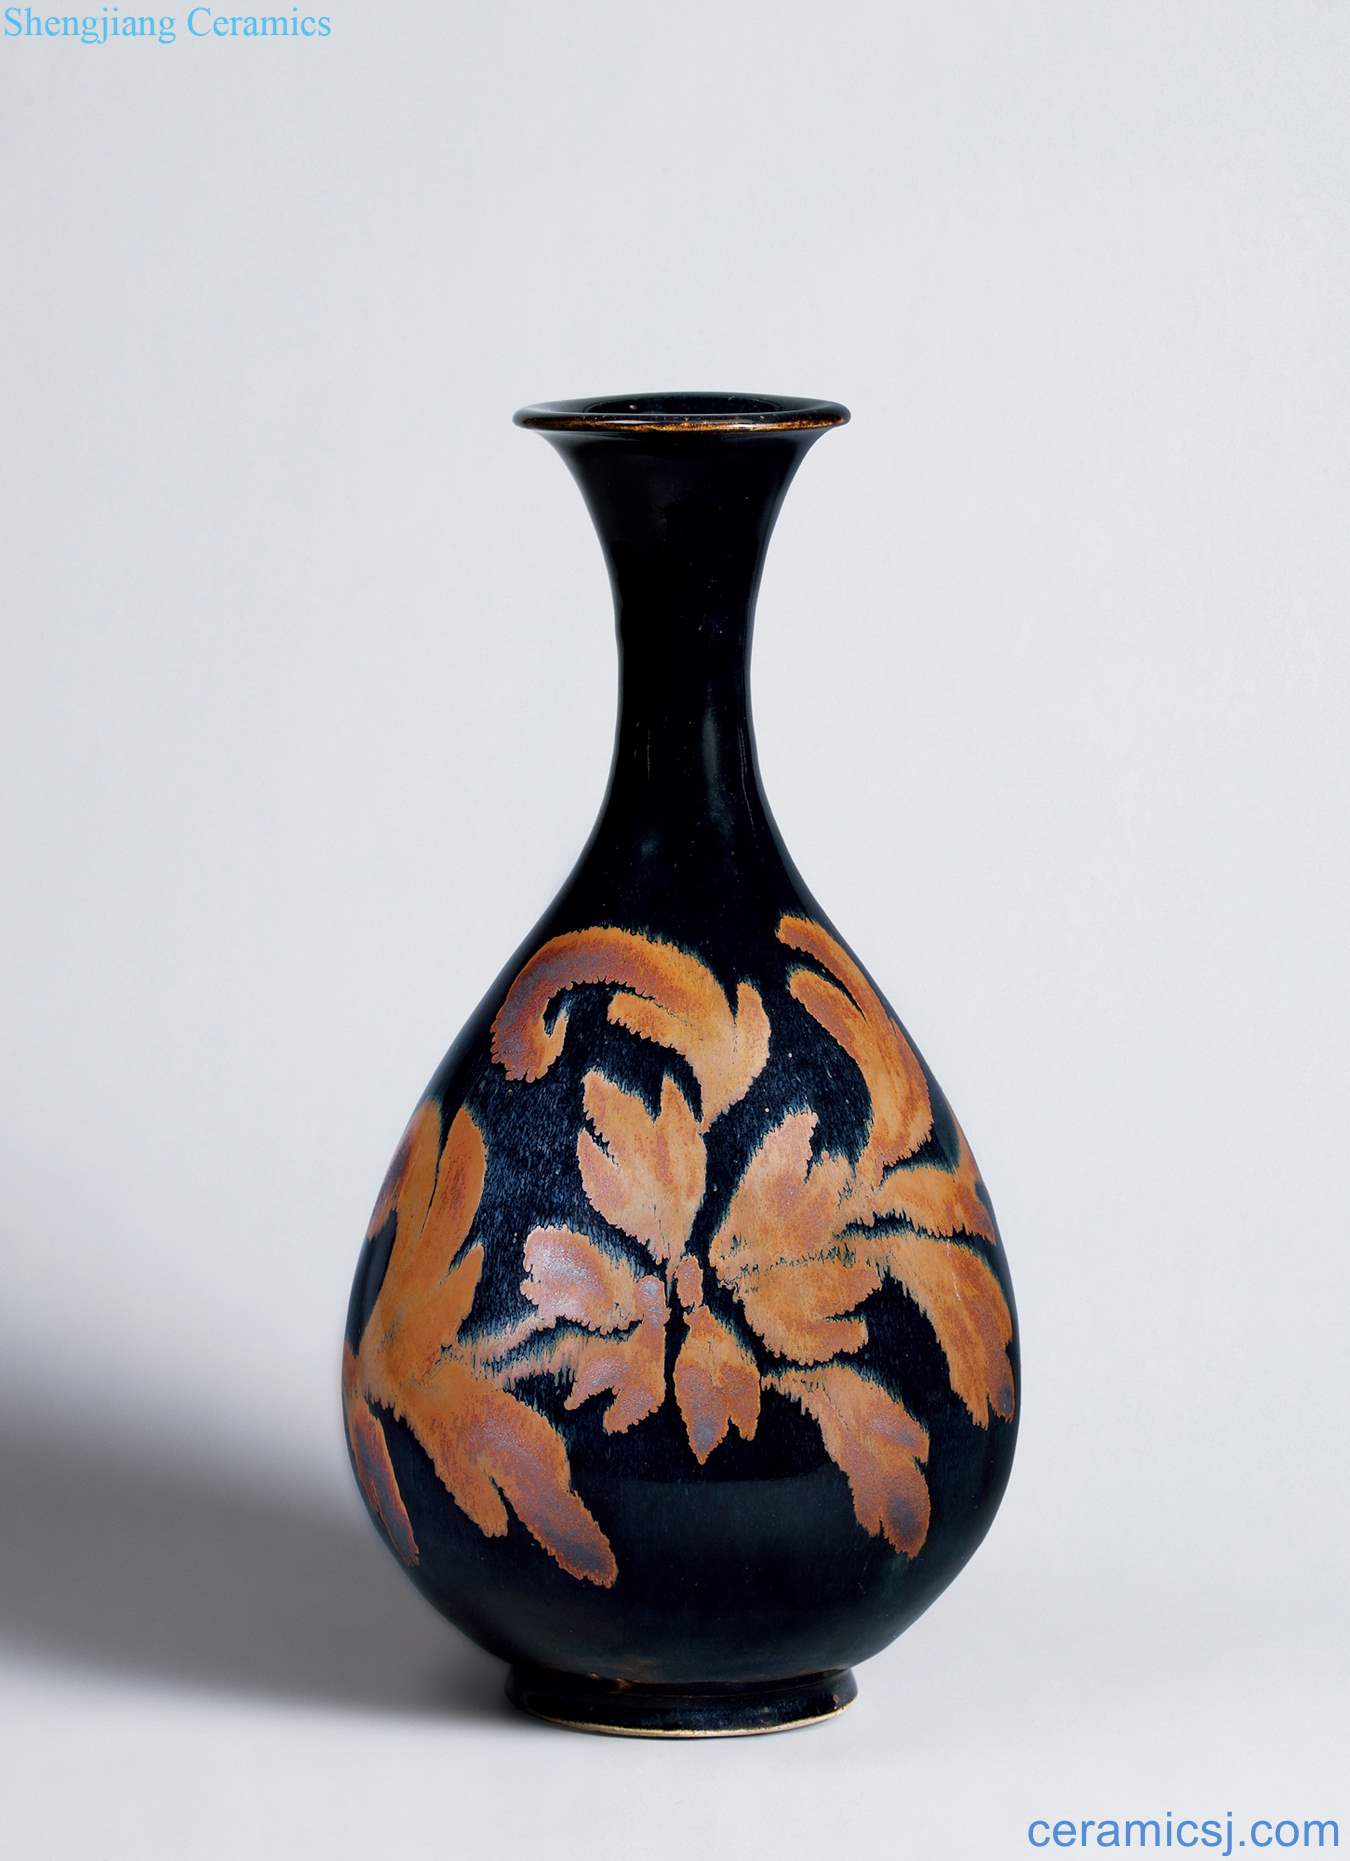 Northern song dynasty (960-1127) and gold (1115-1234), the black glaze rust flower leaf veins okho spring bottle